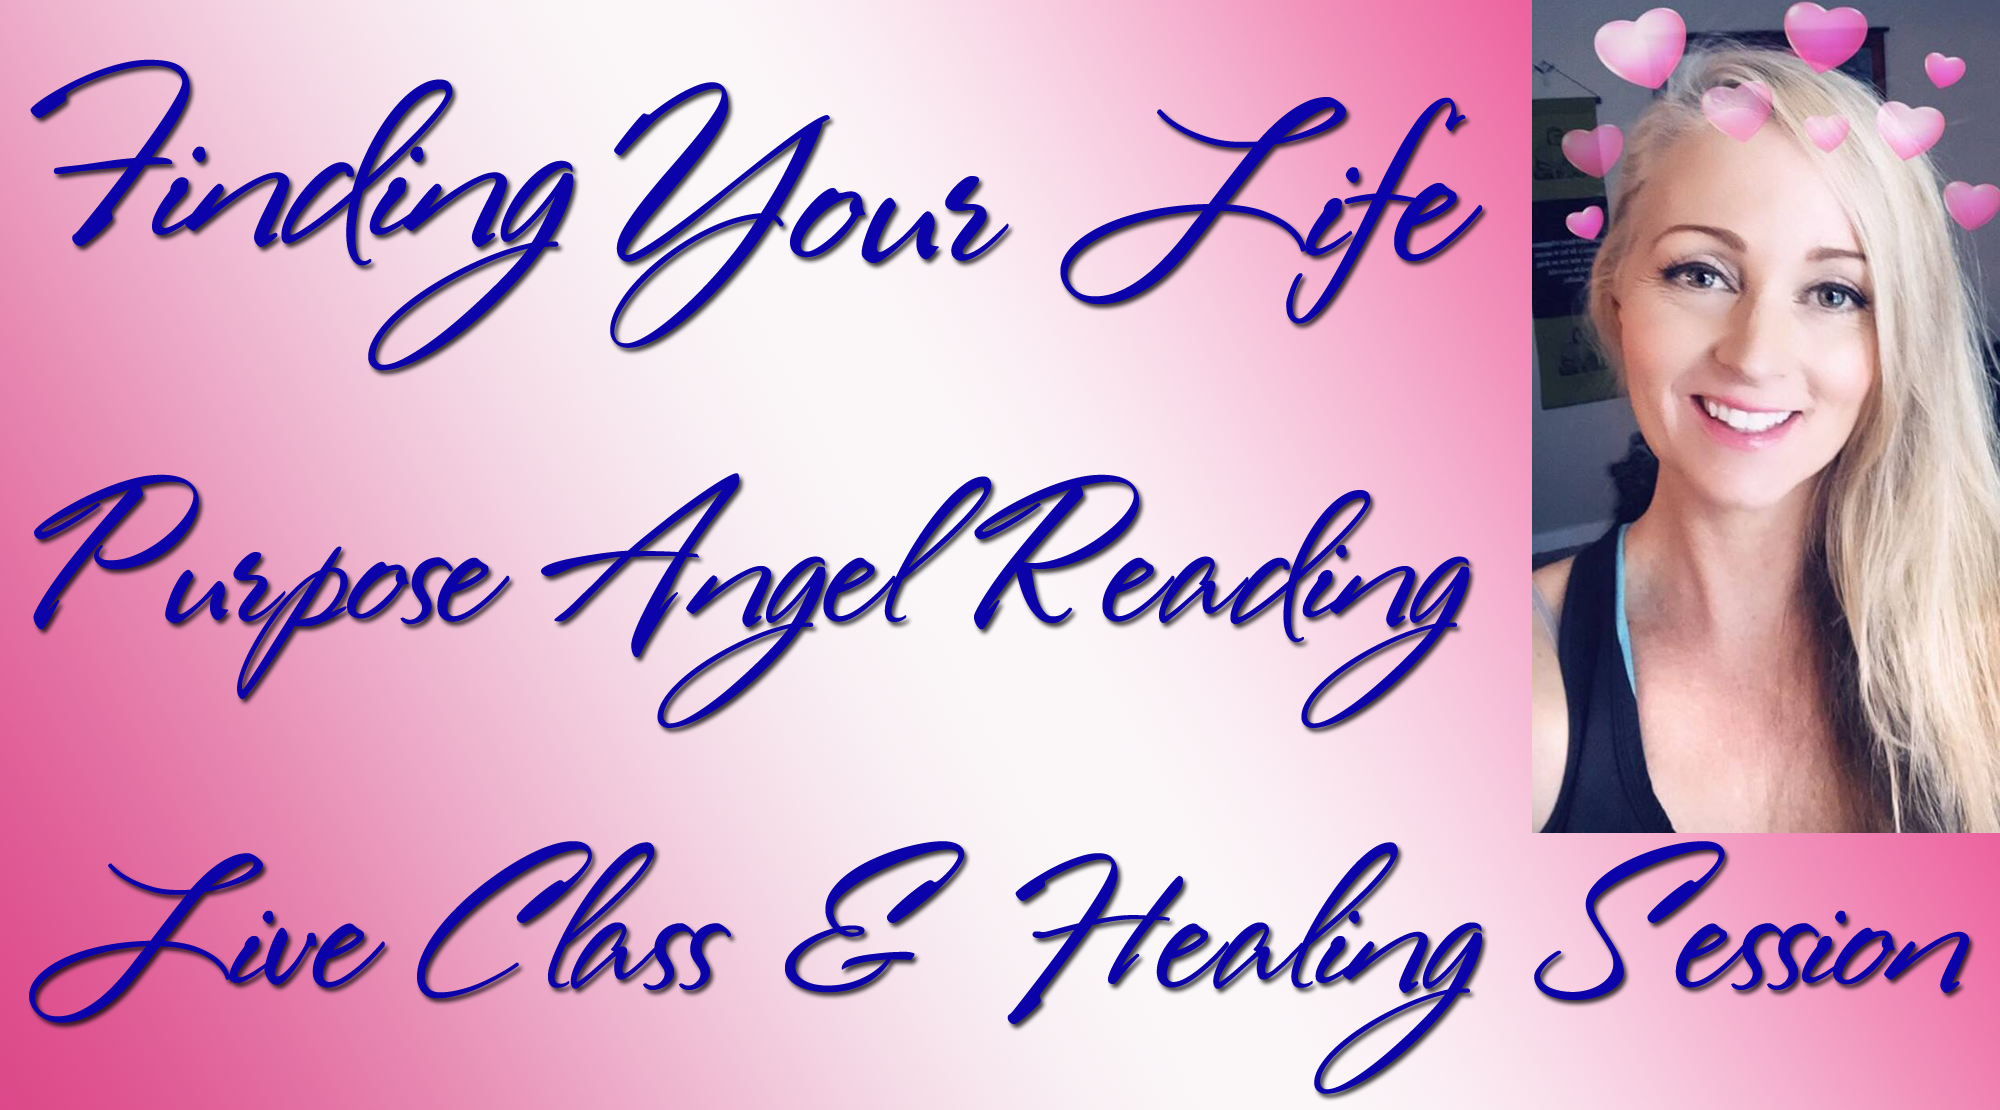 Life Purpose Angel Reading